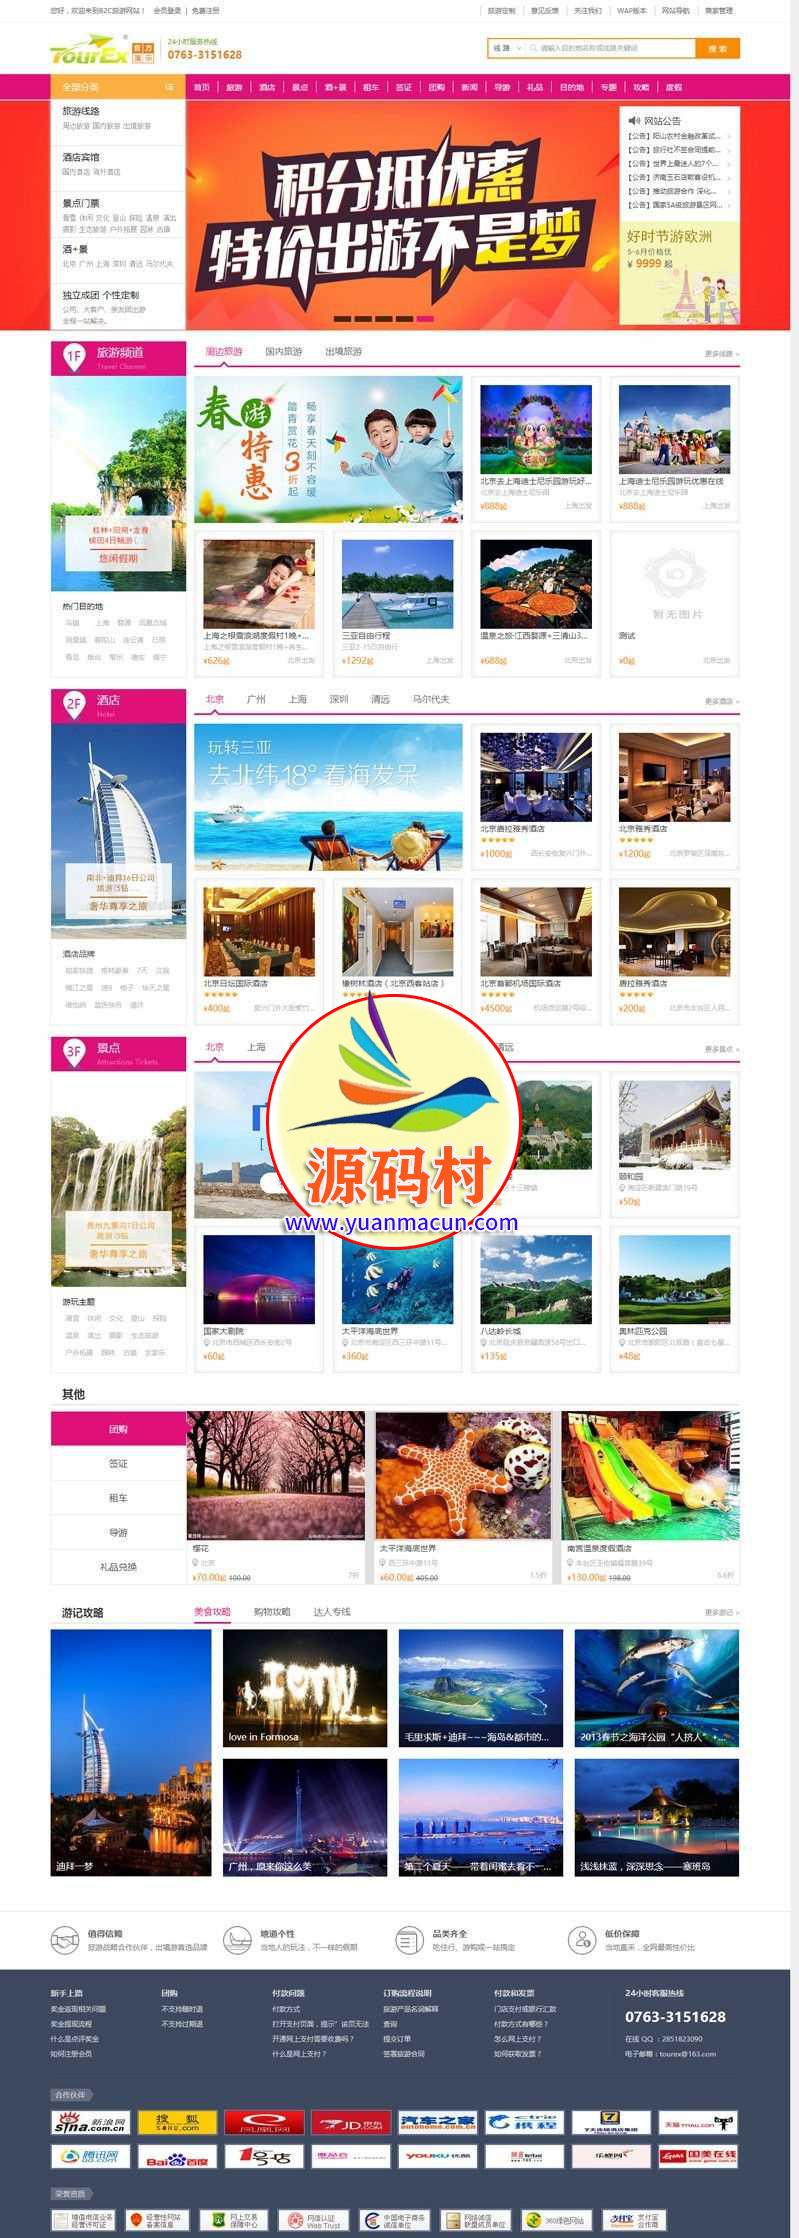 TourEx B2C旅游门户网站源码+多城市版 